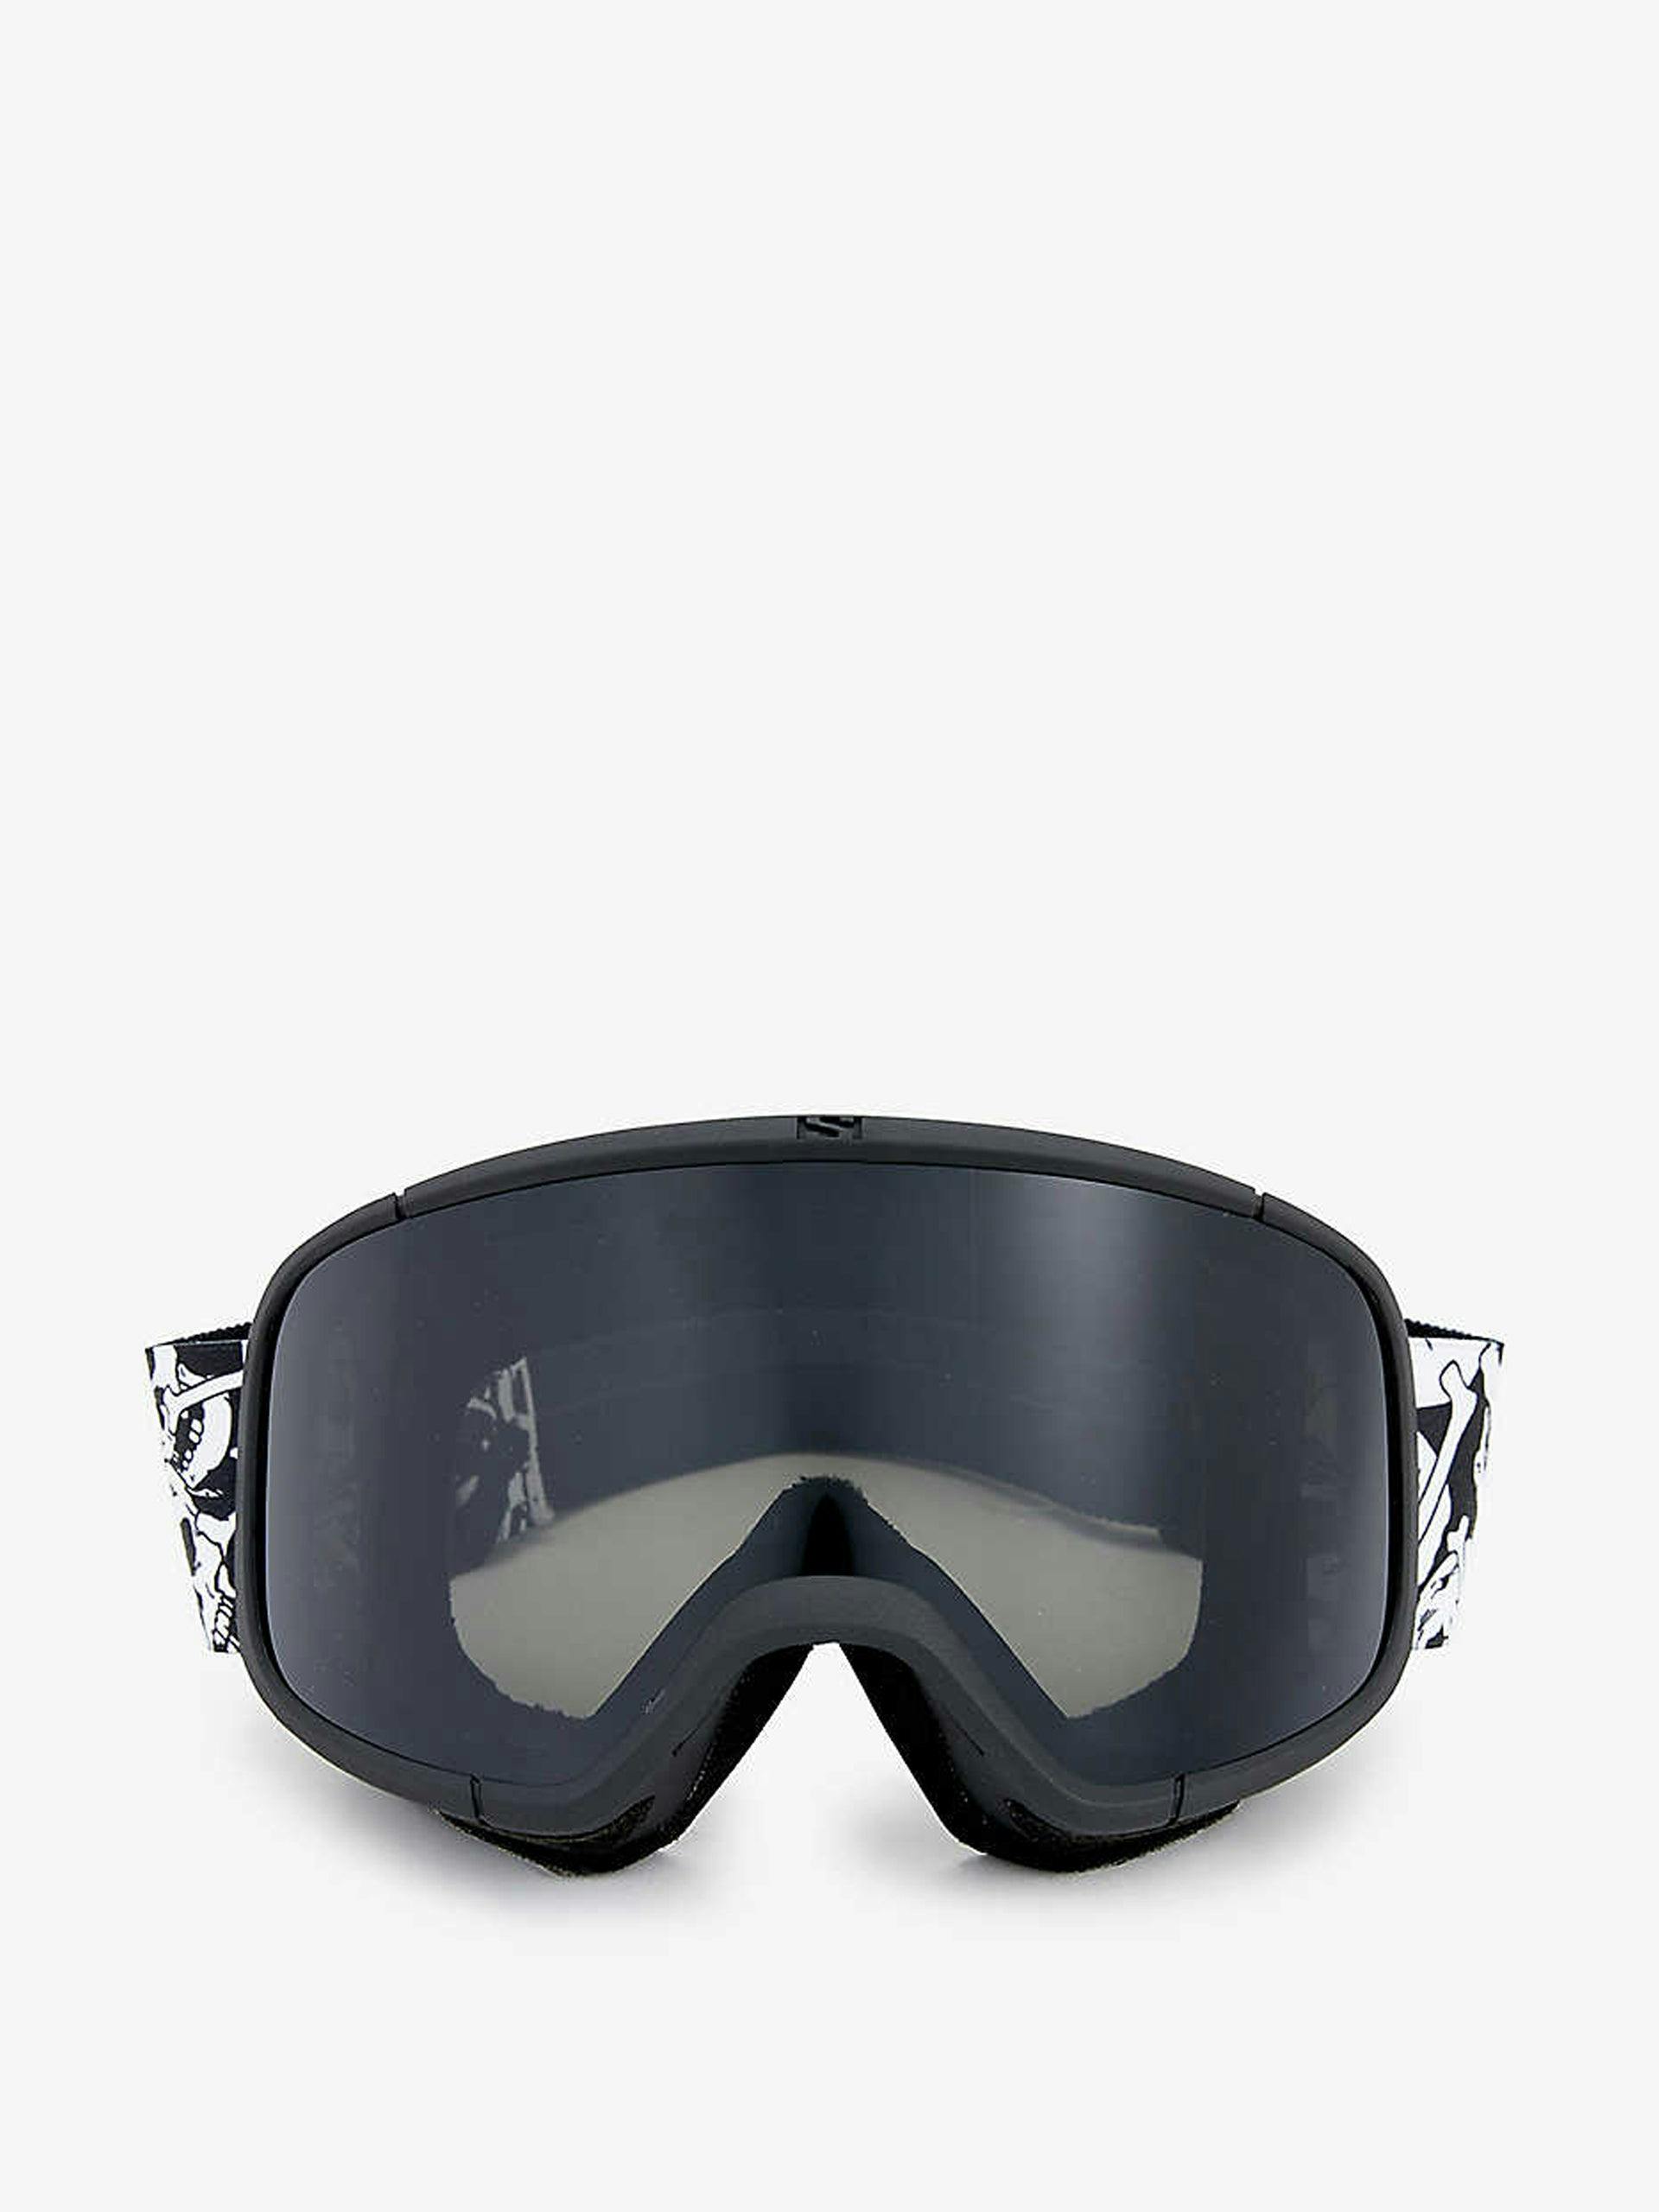 Acetate ski goggles with skull print strap